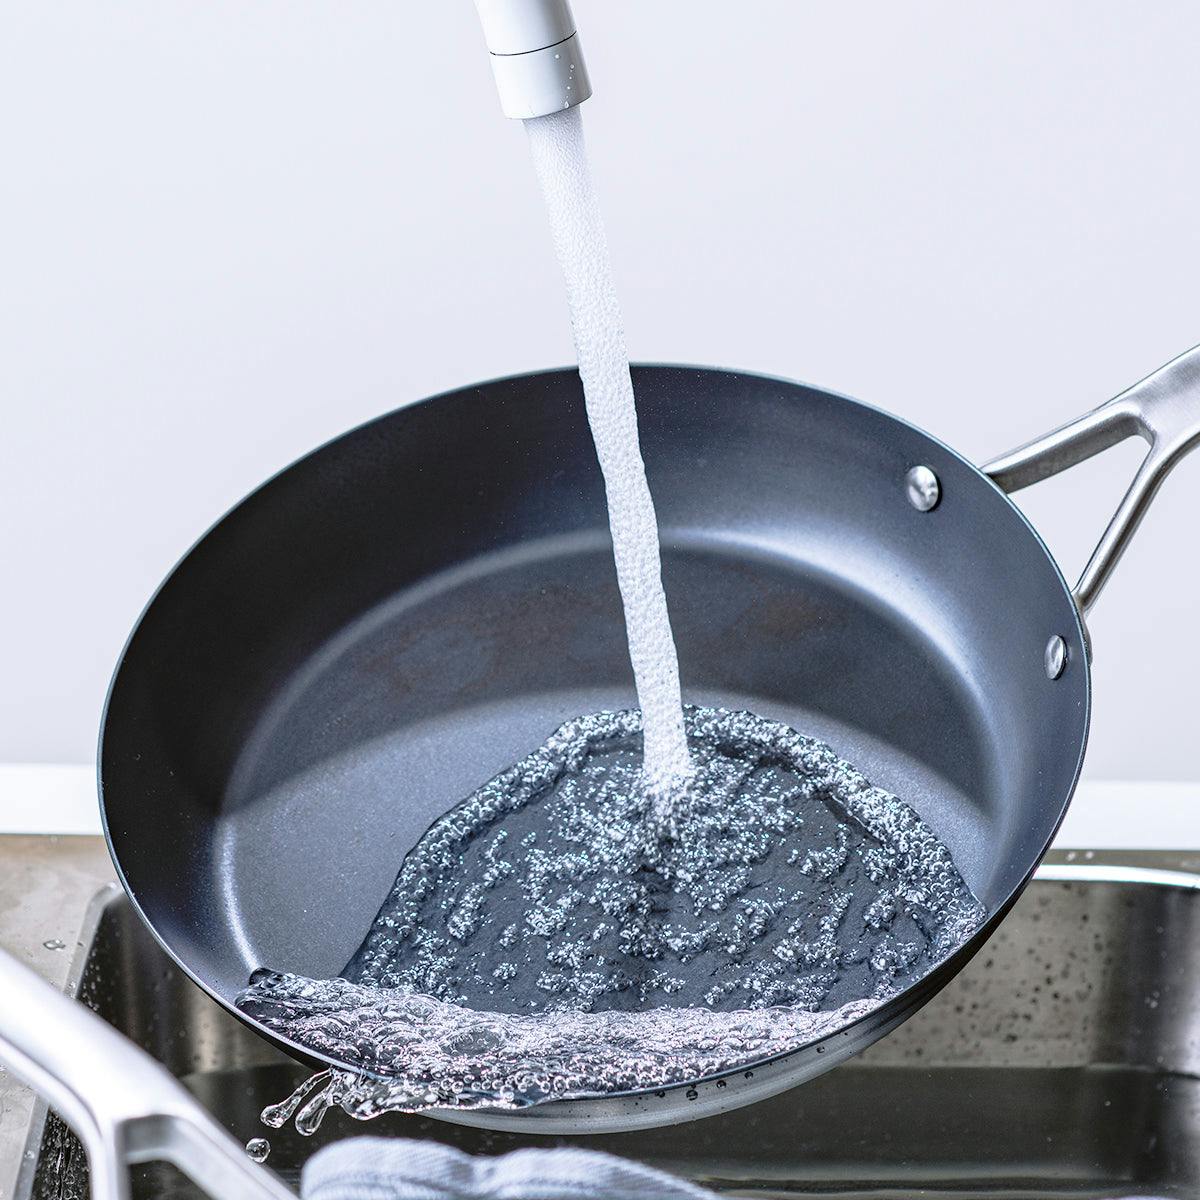 Merten & Storck Pre-Seasoned Carbon Steel Pro Induction 10 Frying Pan  Skillet, Black 